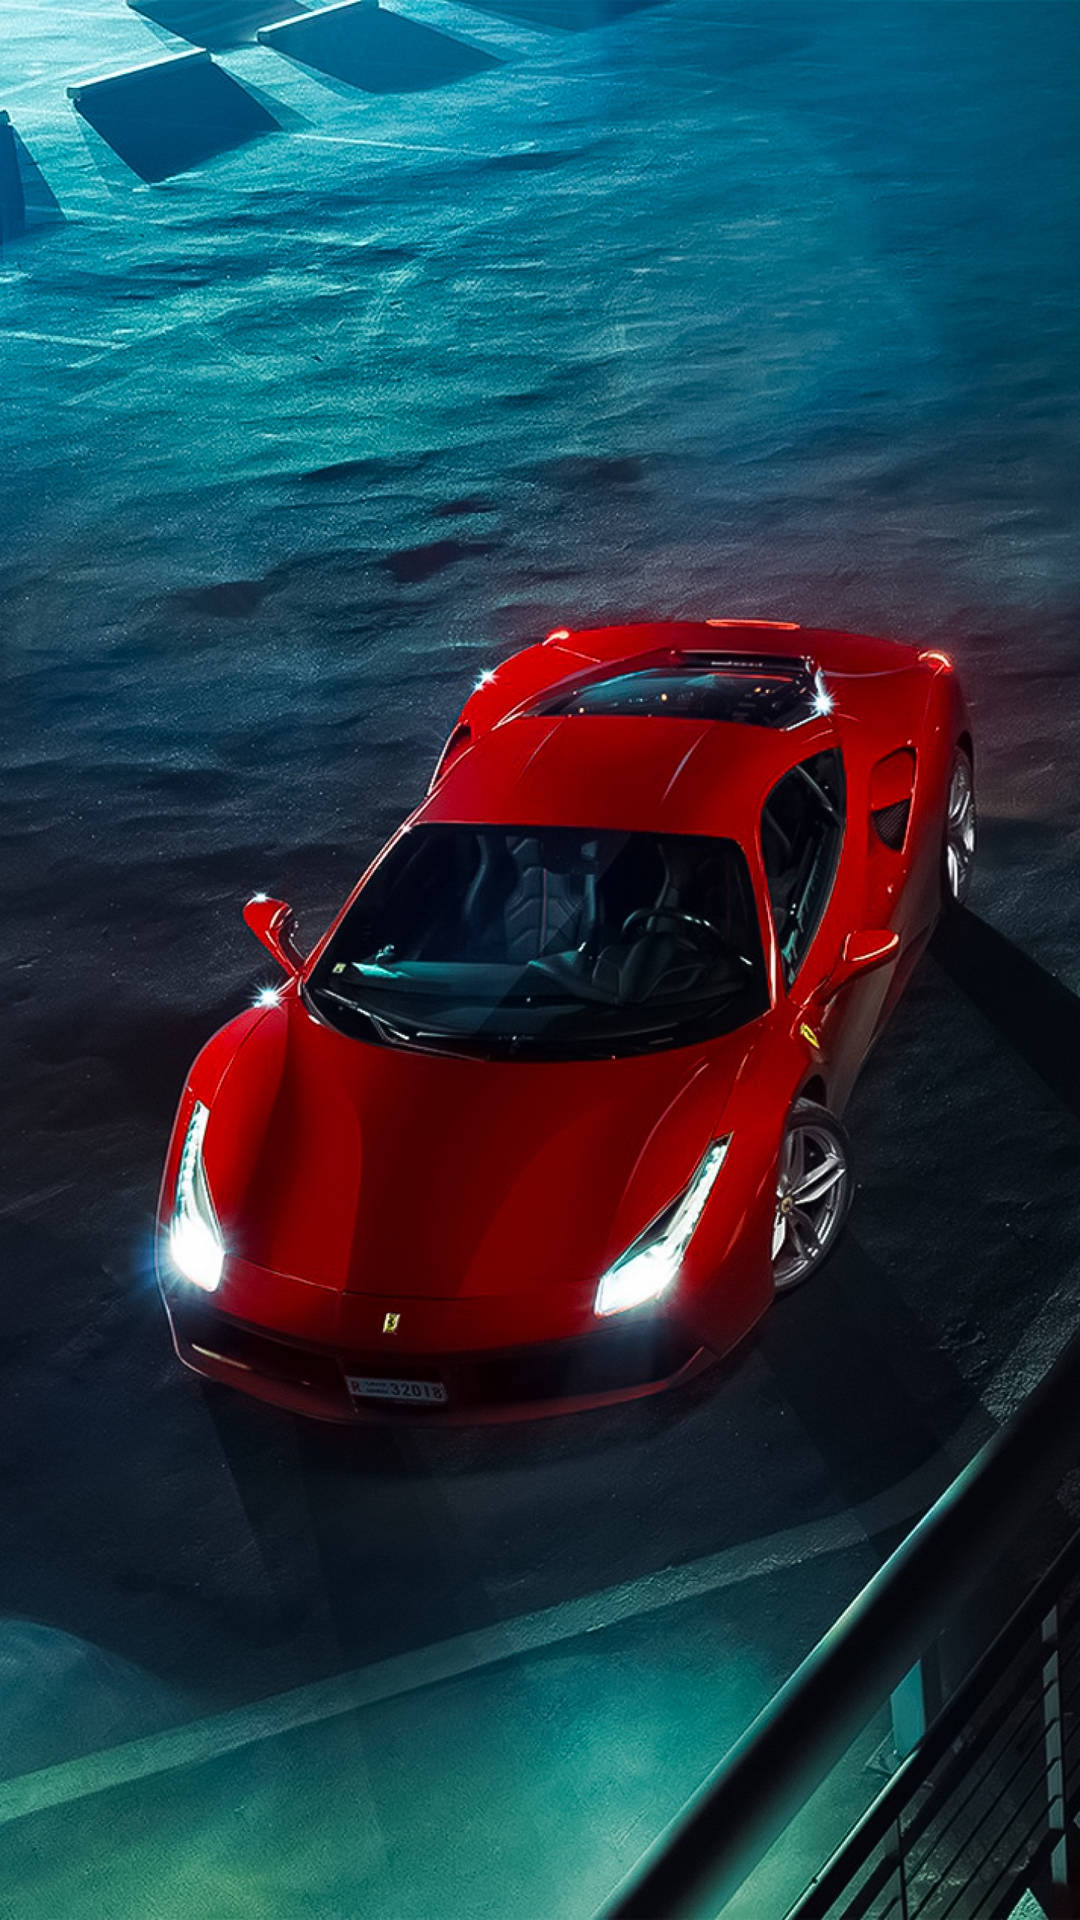 Roter458 Ferrari Handy-überblicks-schnappschuss Wallpaper